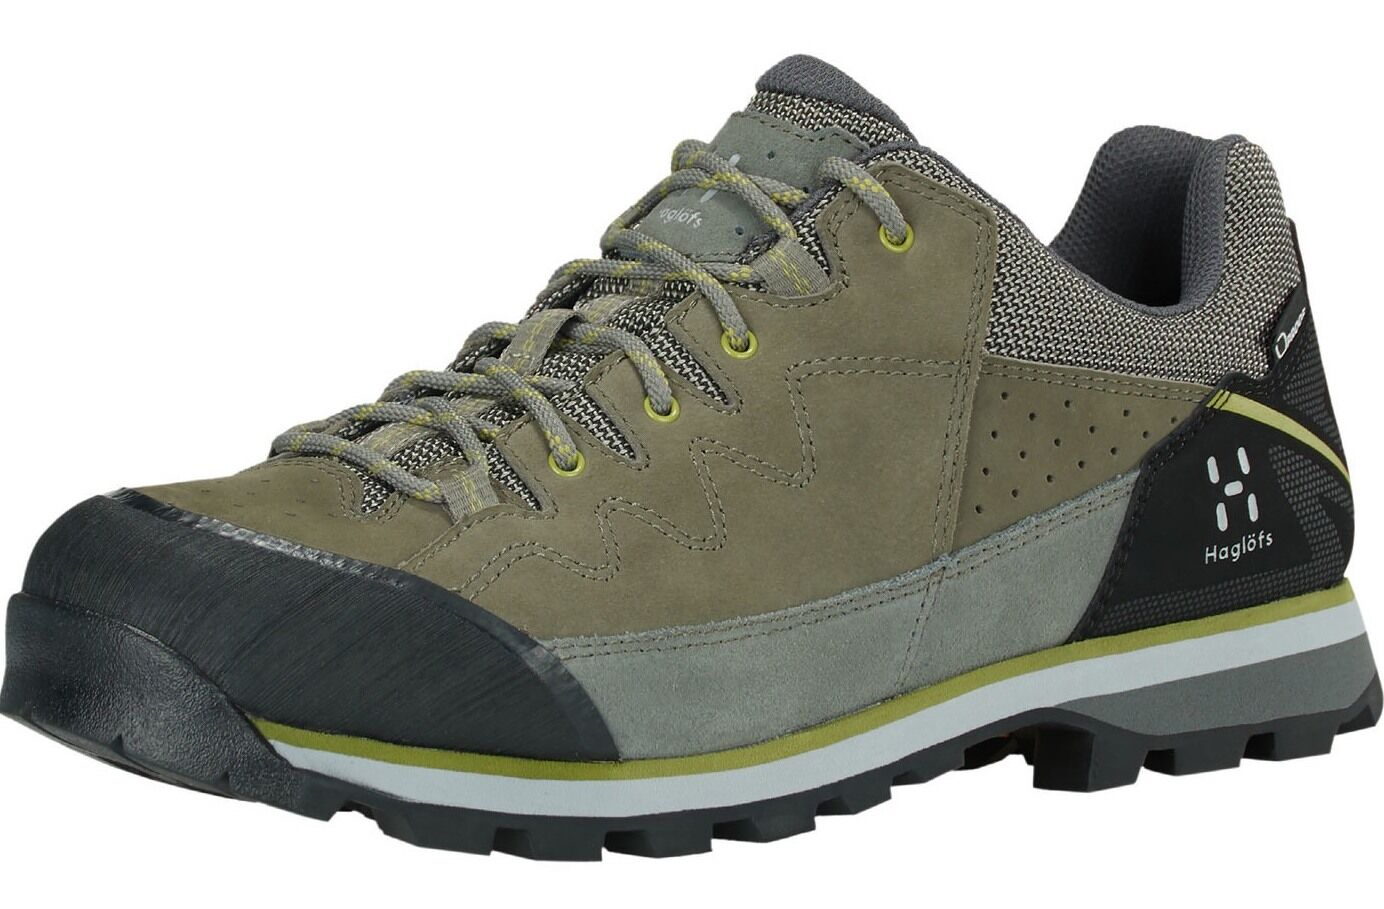 Haglöfs - Vertigo Proof Eco - Walking shoes - Men's